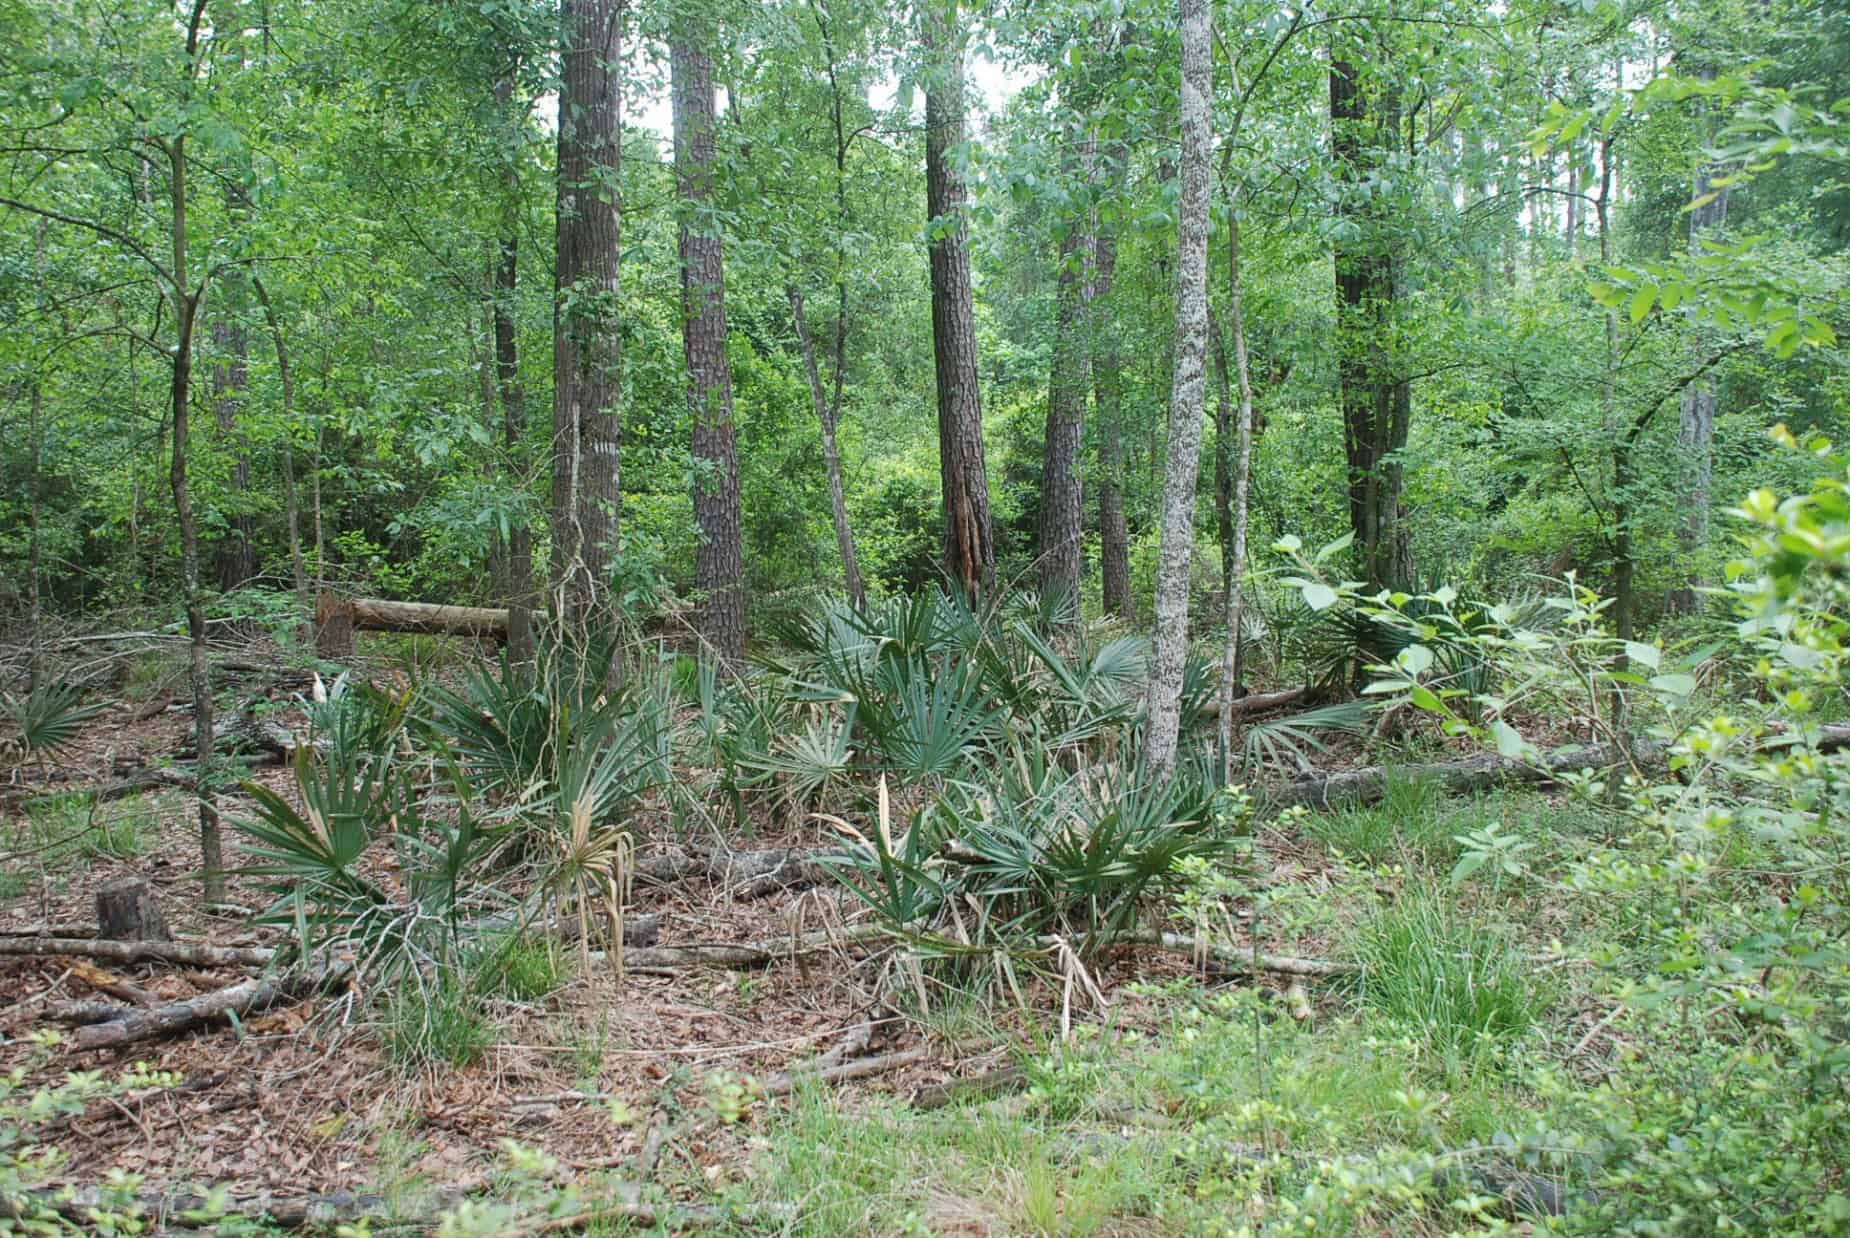 TX Foliage along Dirt Path in 100 Acre Wood Preserve Houston TX